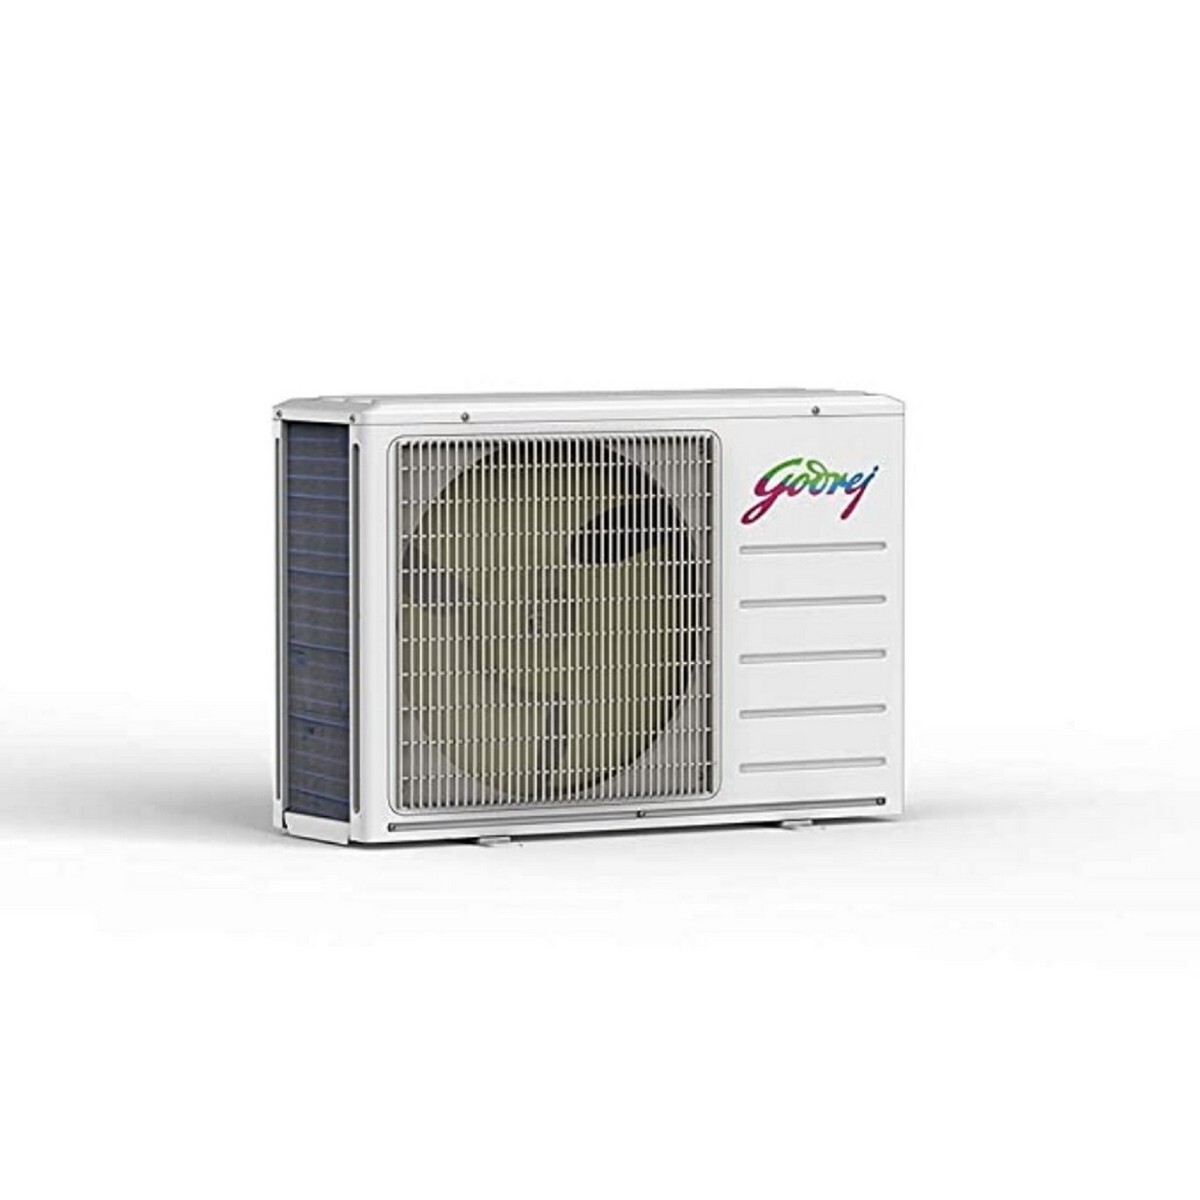 Godrej Inverter Air Conditioner SIC24ITC3-WWA 2 Ton 3 Star